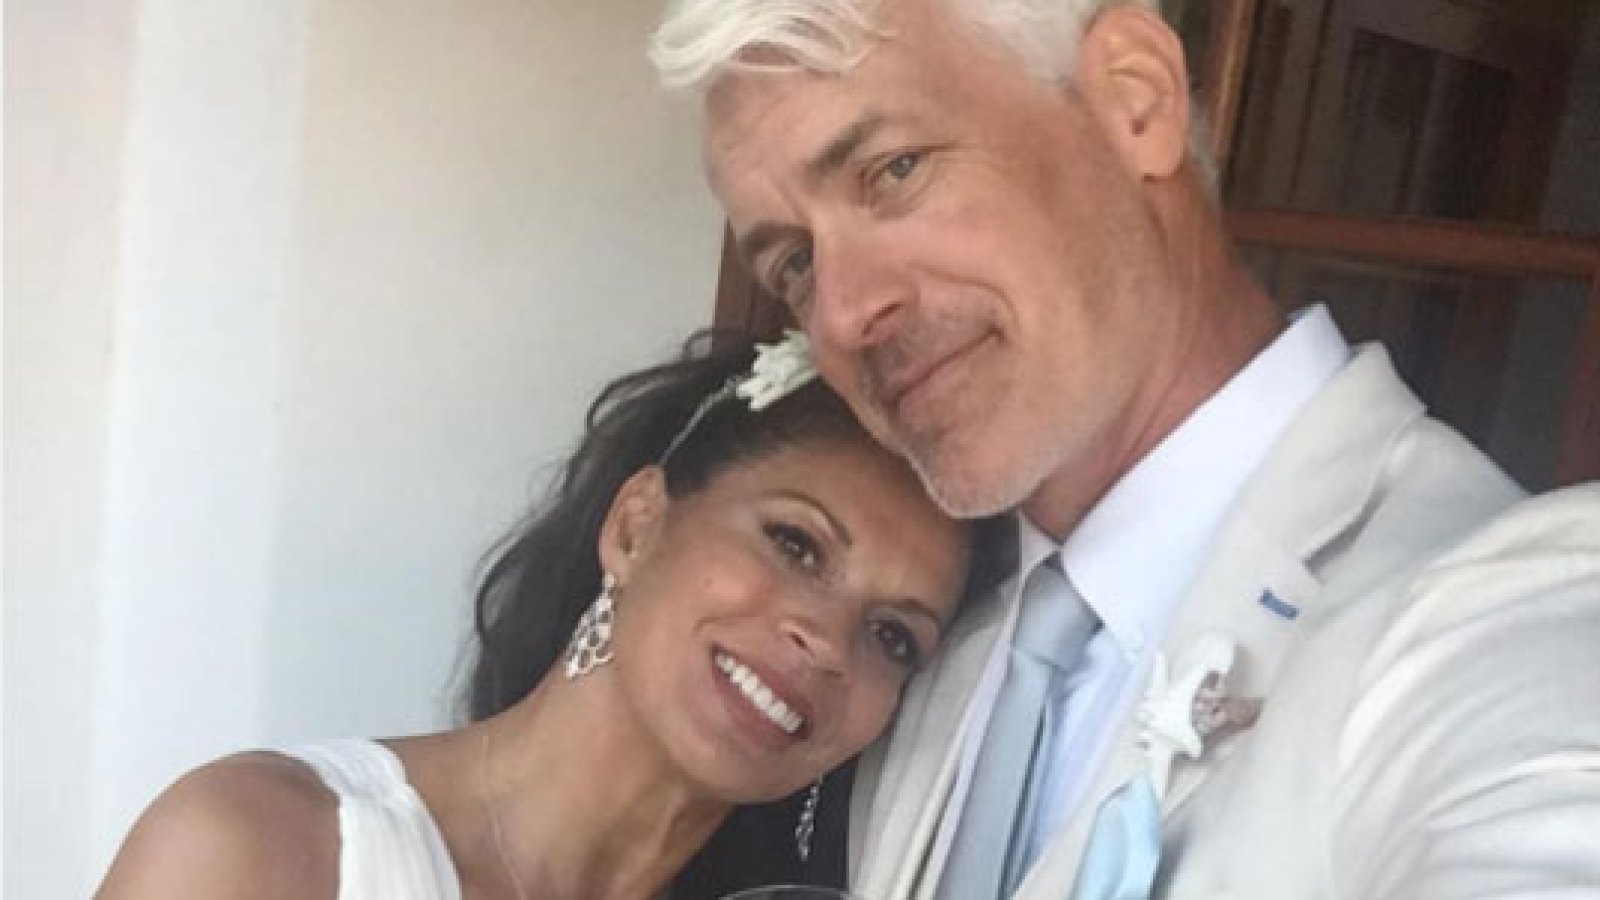 Dina Eastwood marries husband Scott Fisher